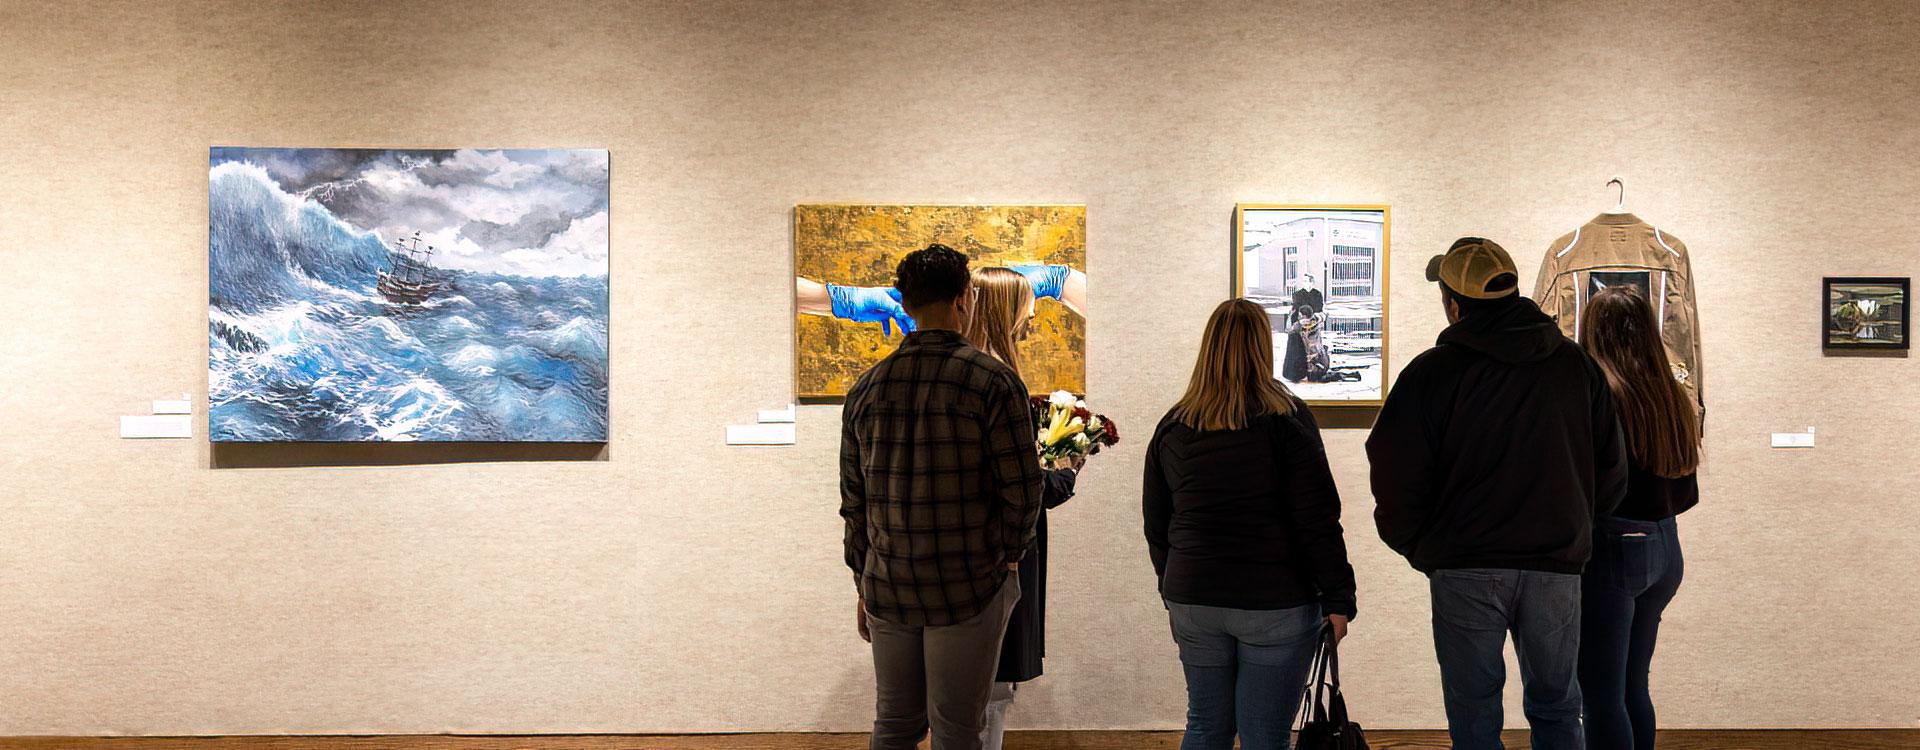 Students viewing Student Art Exhibition in Schlueter Art Gallery